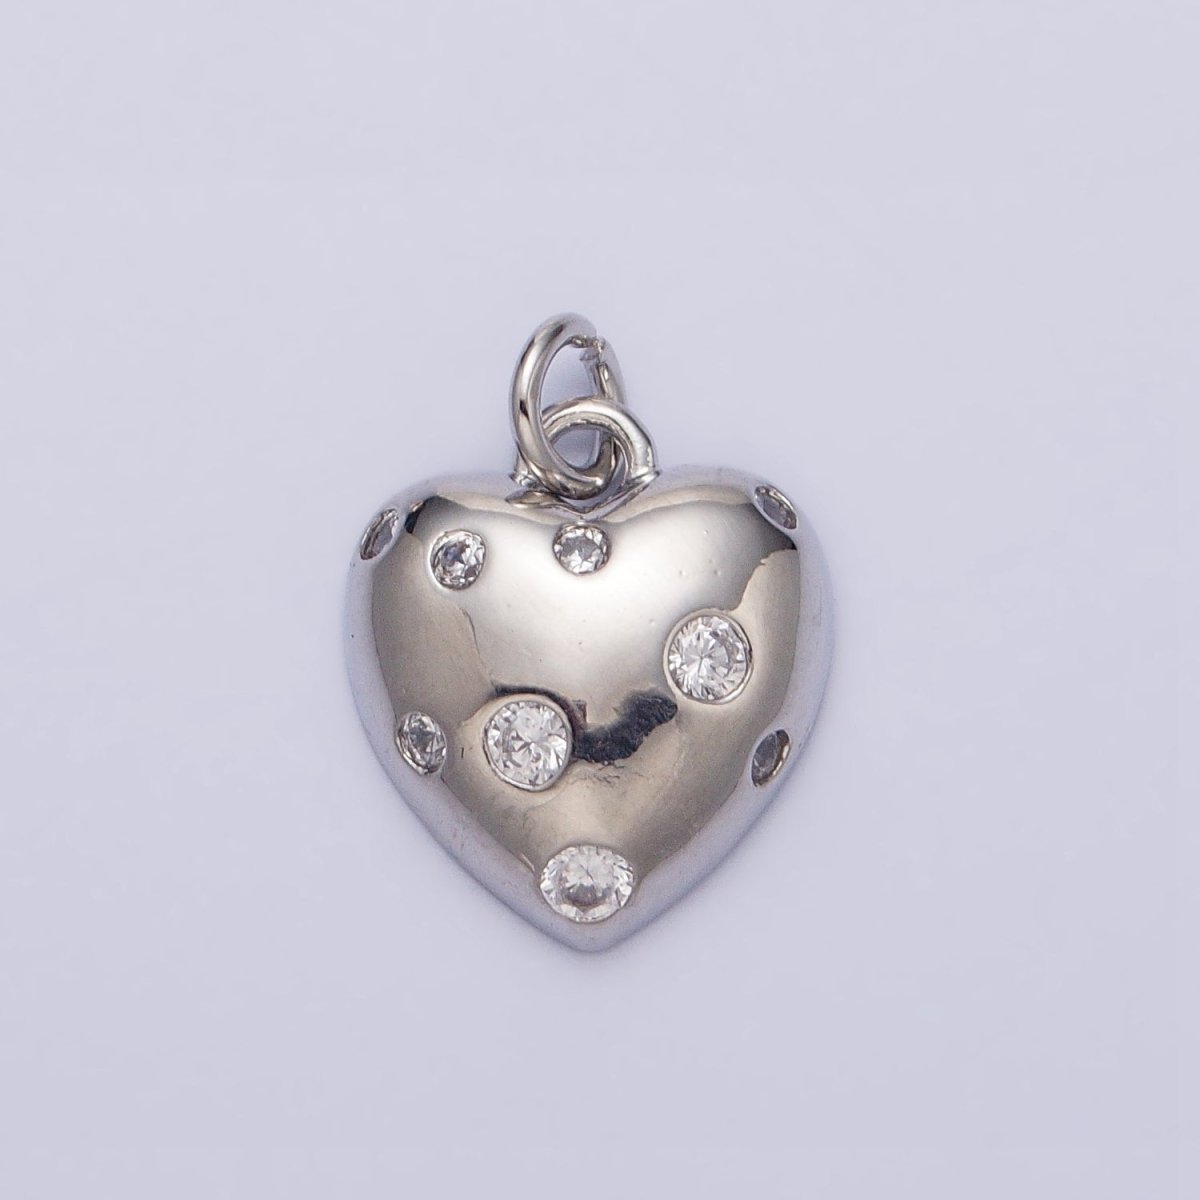 OS Mini Gold Heart Charm with CZ Stone Dots Bubble Love Valentine Jewelry Pendant AC508 AC509 - DLUXCA